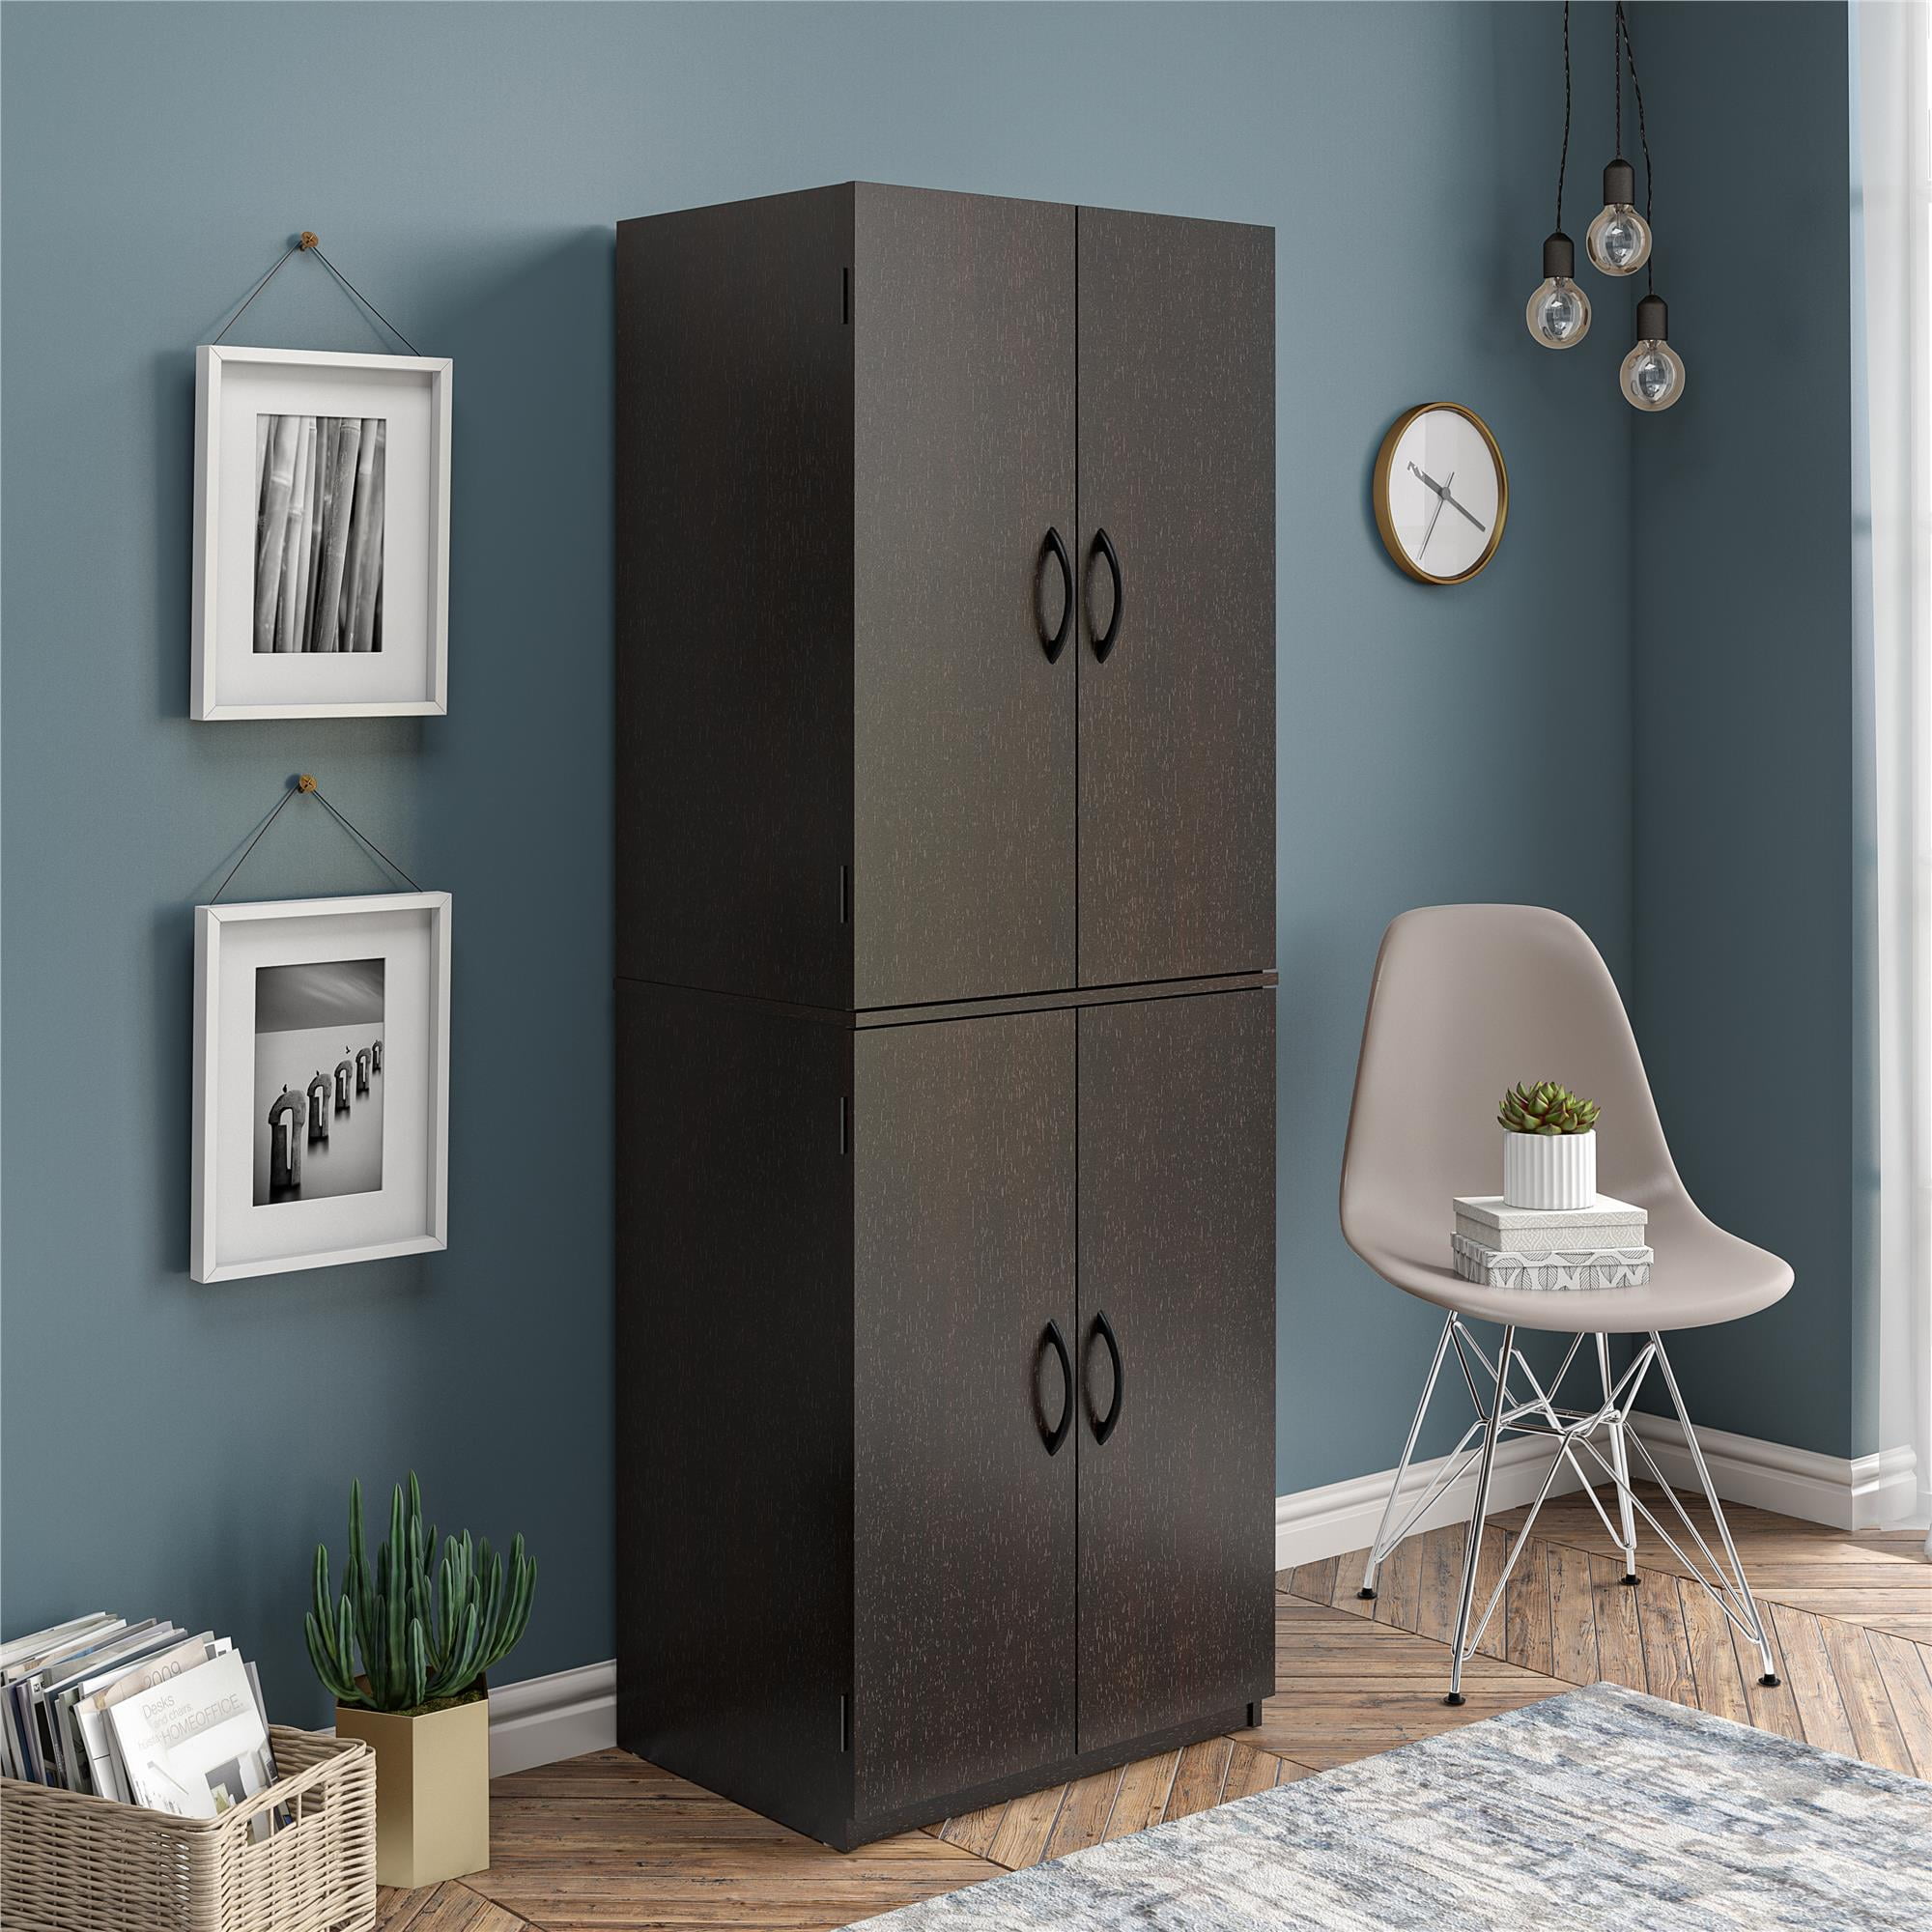 Home Office Storage Cabinet Organize Adjustable Shelves Kitchen Furniture Pantry 